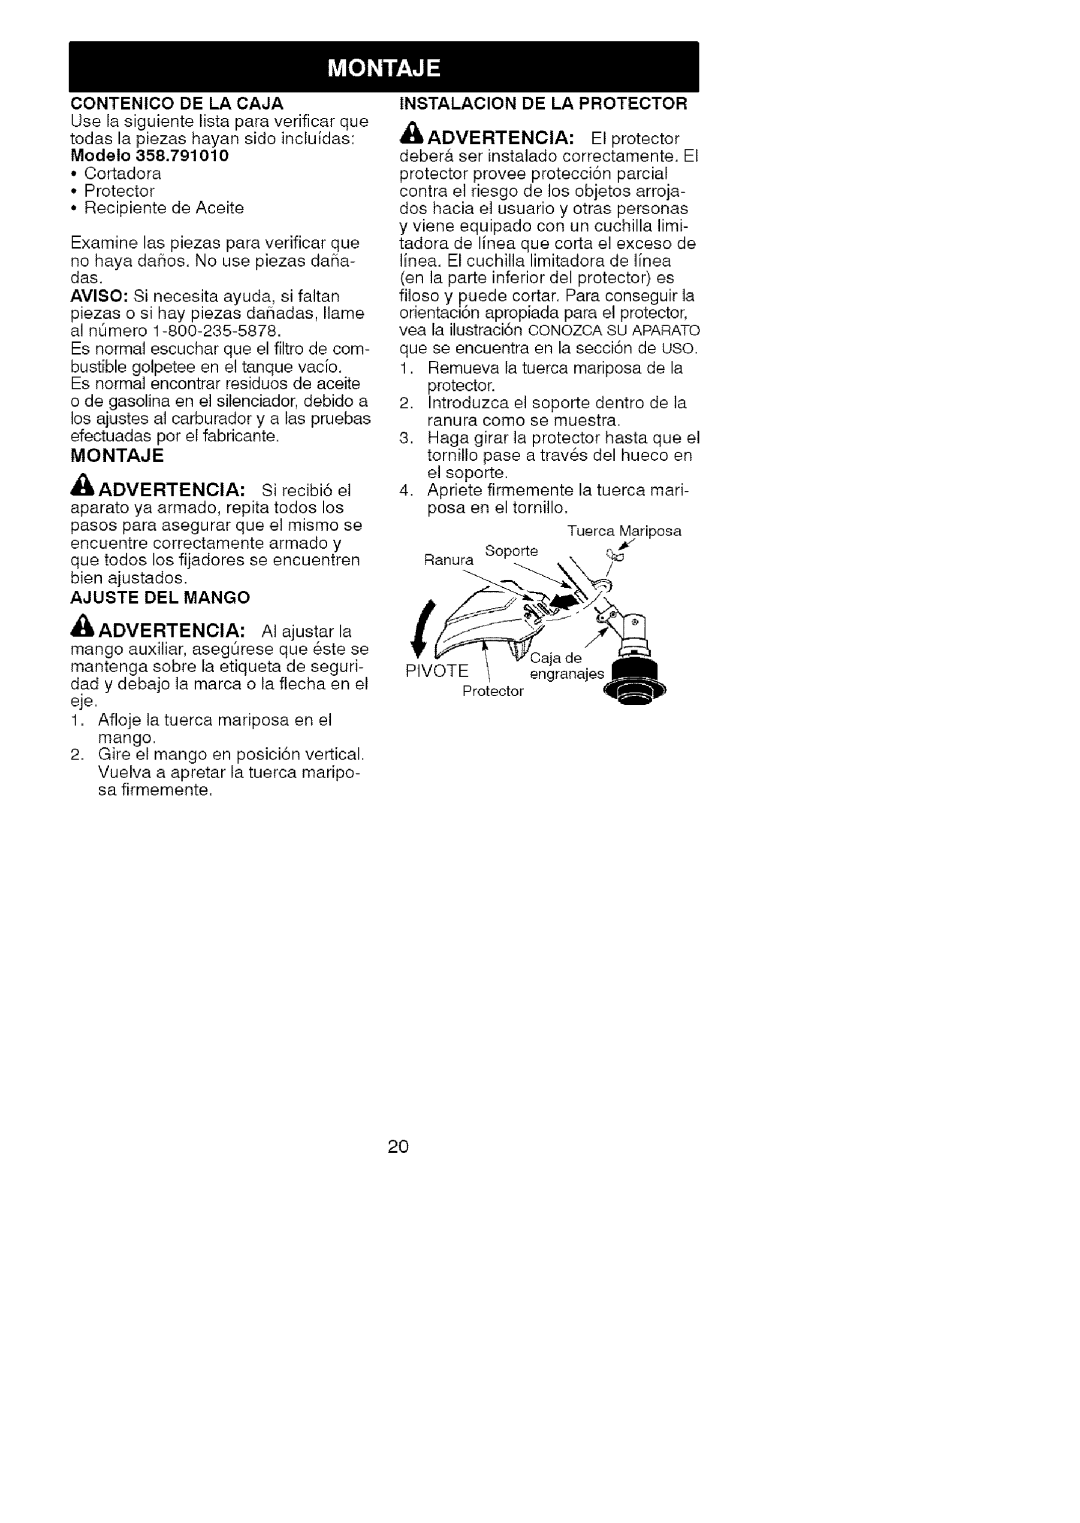 Craftsman 358.79101 instruction manual Montaje, Ajuste Del Mango 